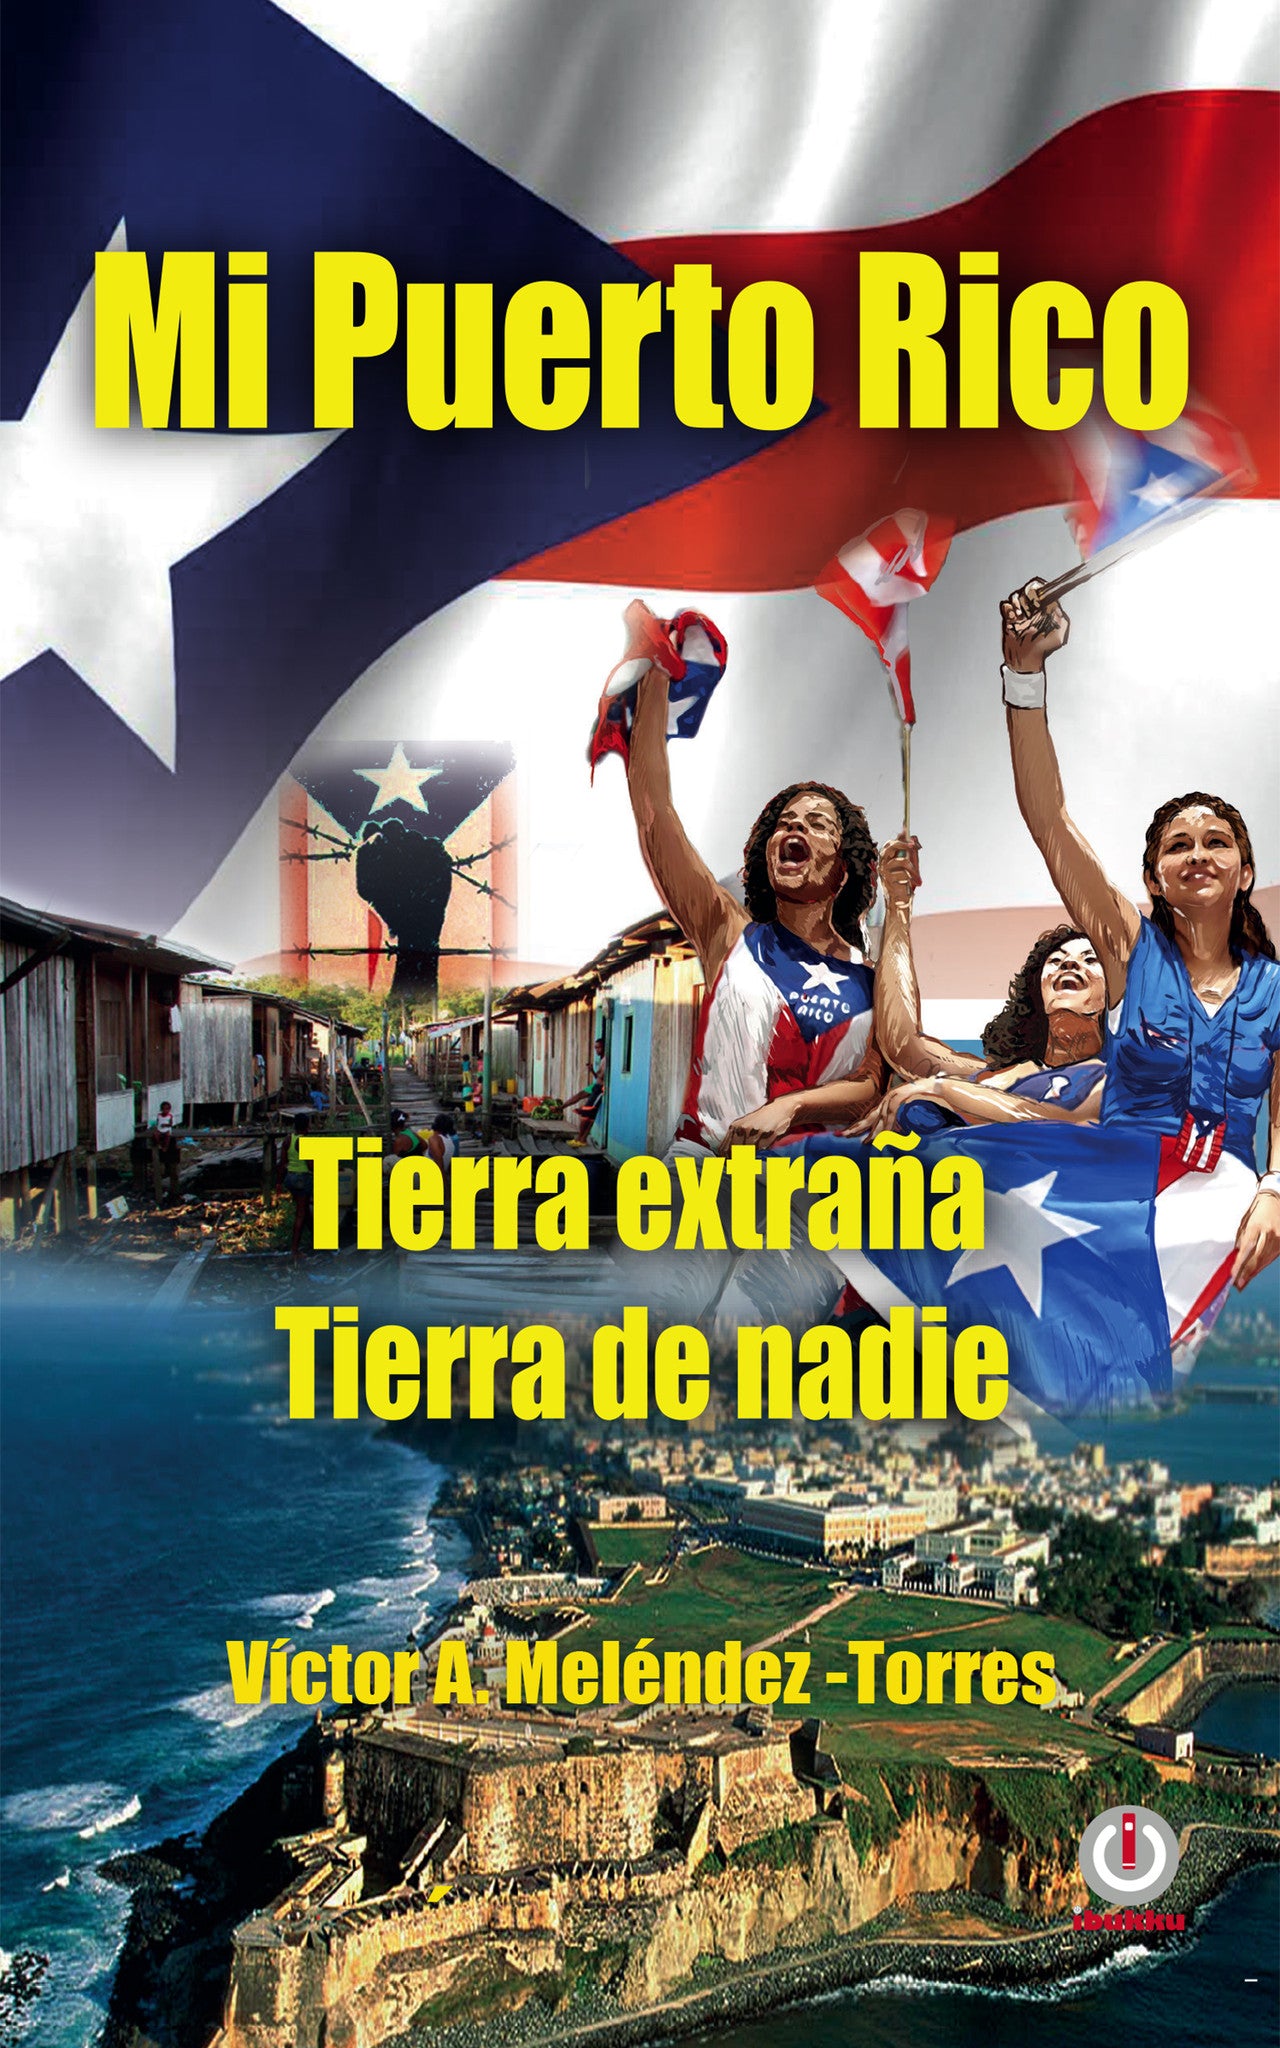 Mi Puerto Rico - Tierra extraña, tierra de nadie - ibukku, LLC